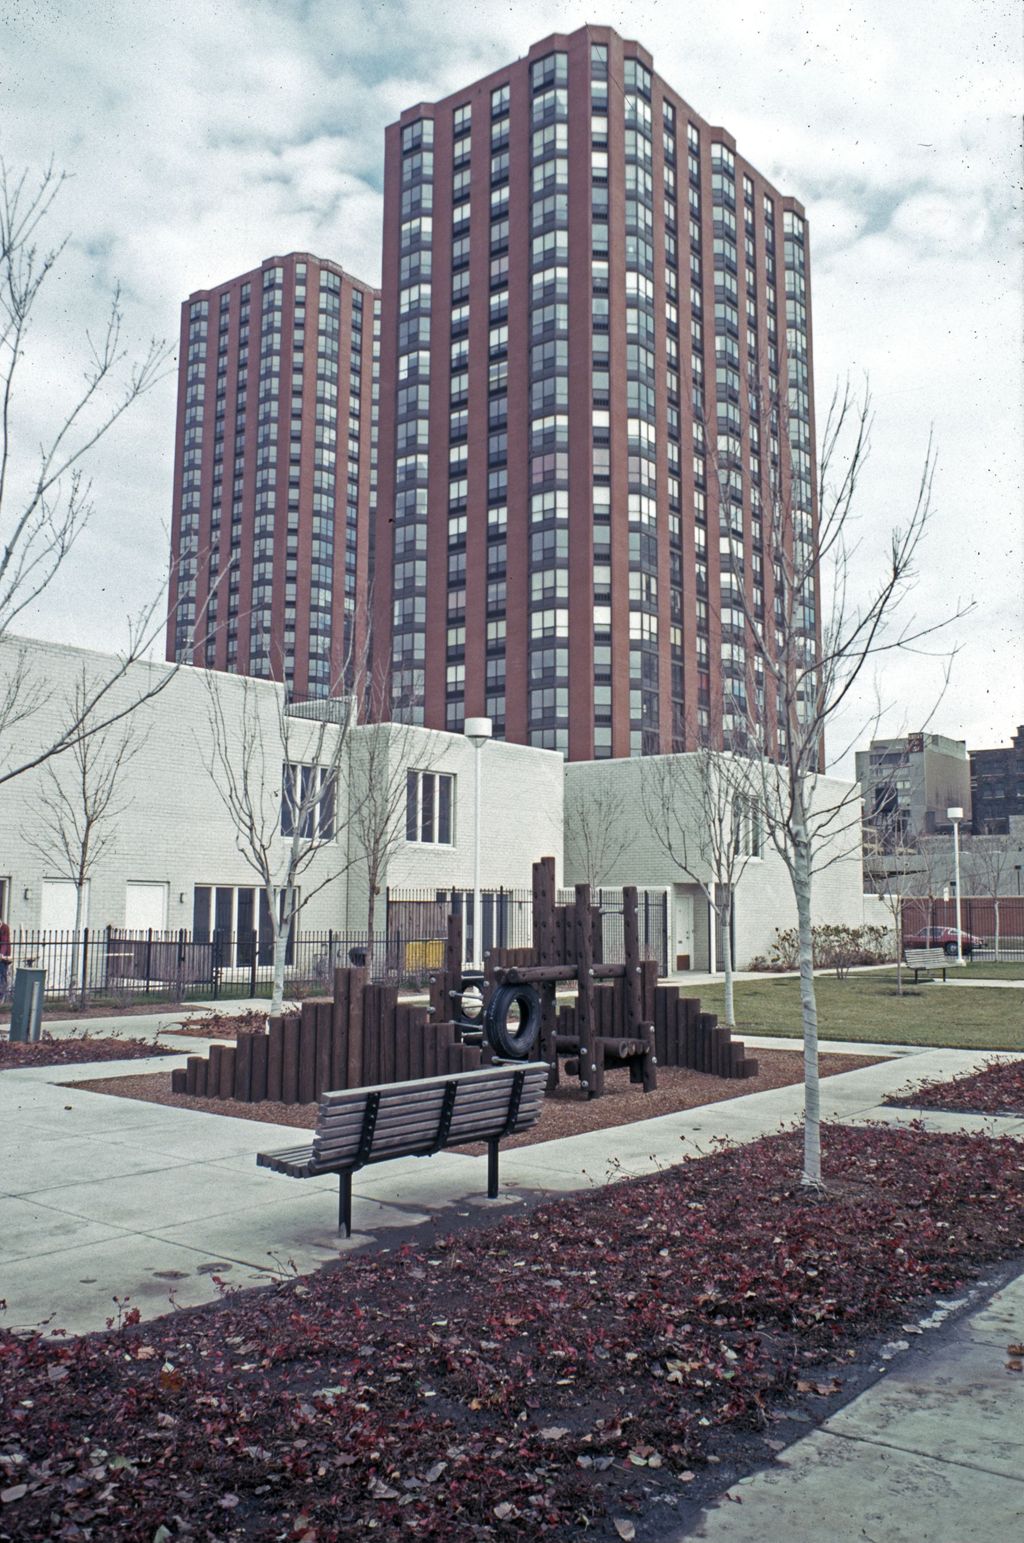 Miniature of Dearborn Park residential development